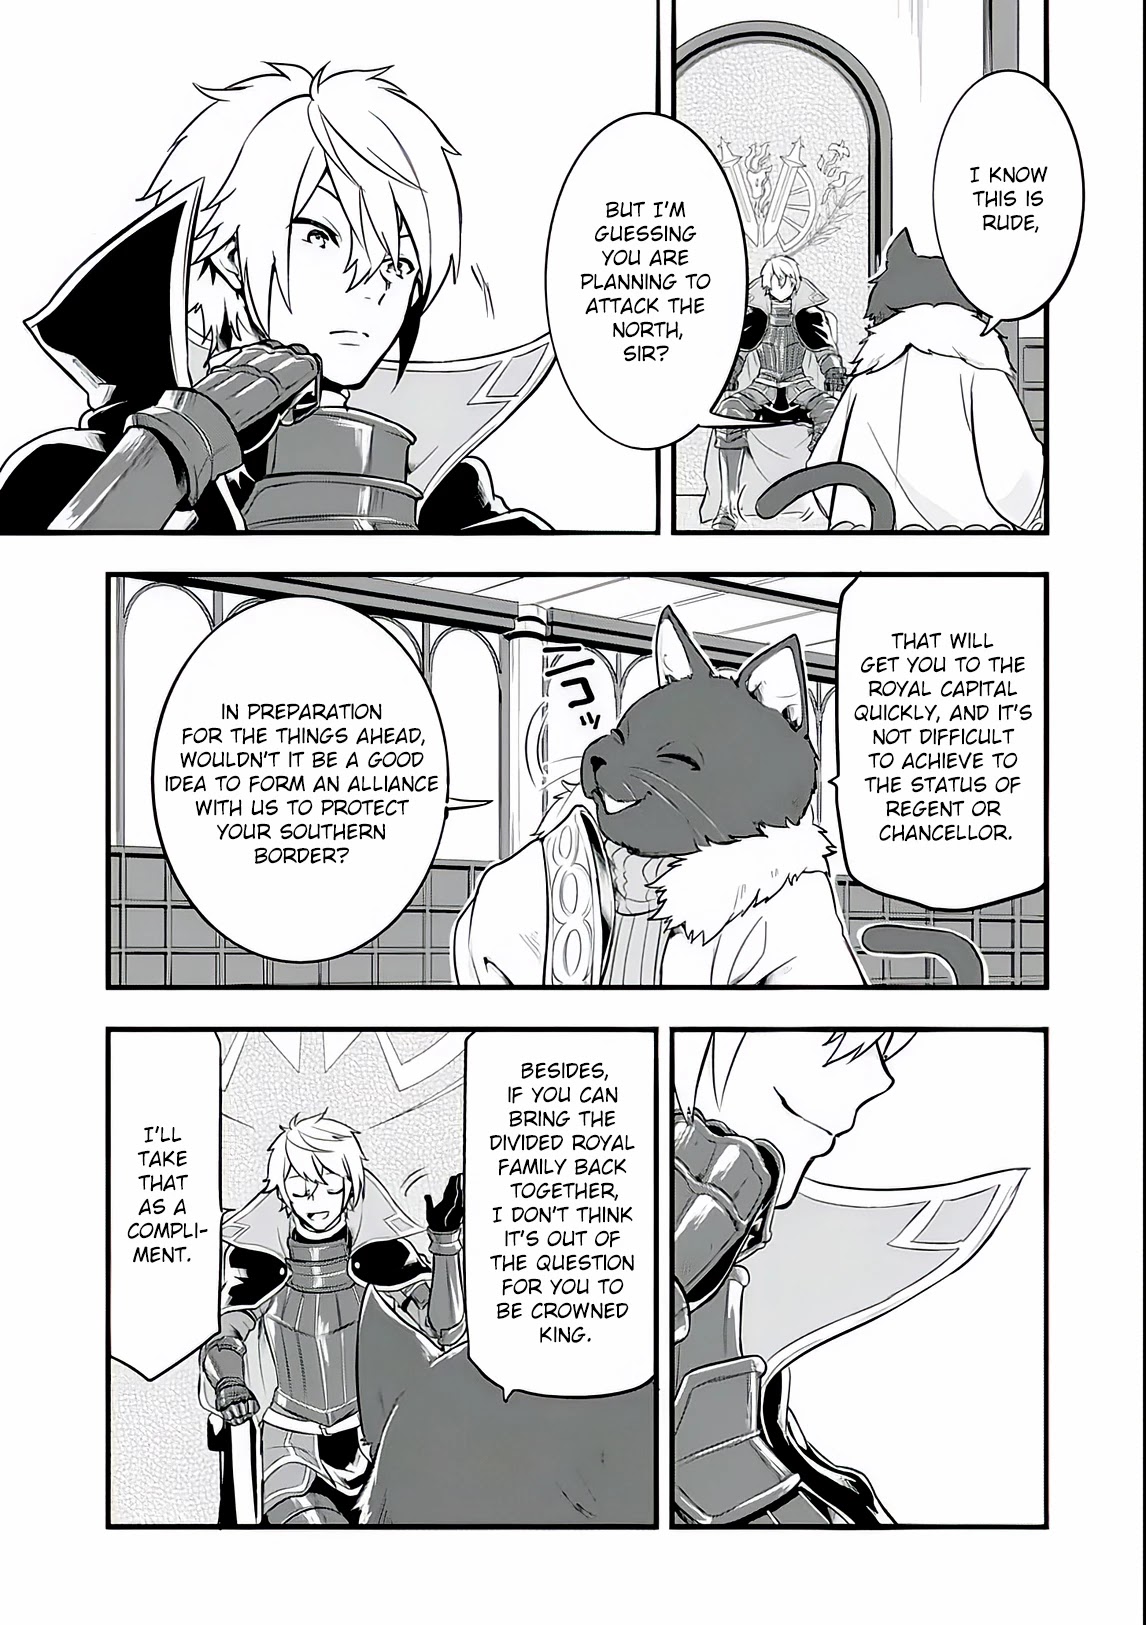 Mysterious Job Called Oda Nobunaga - Page 3